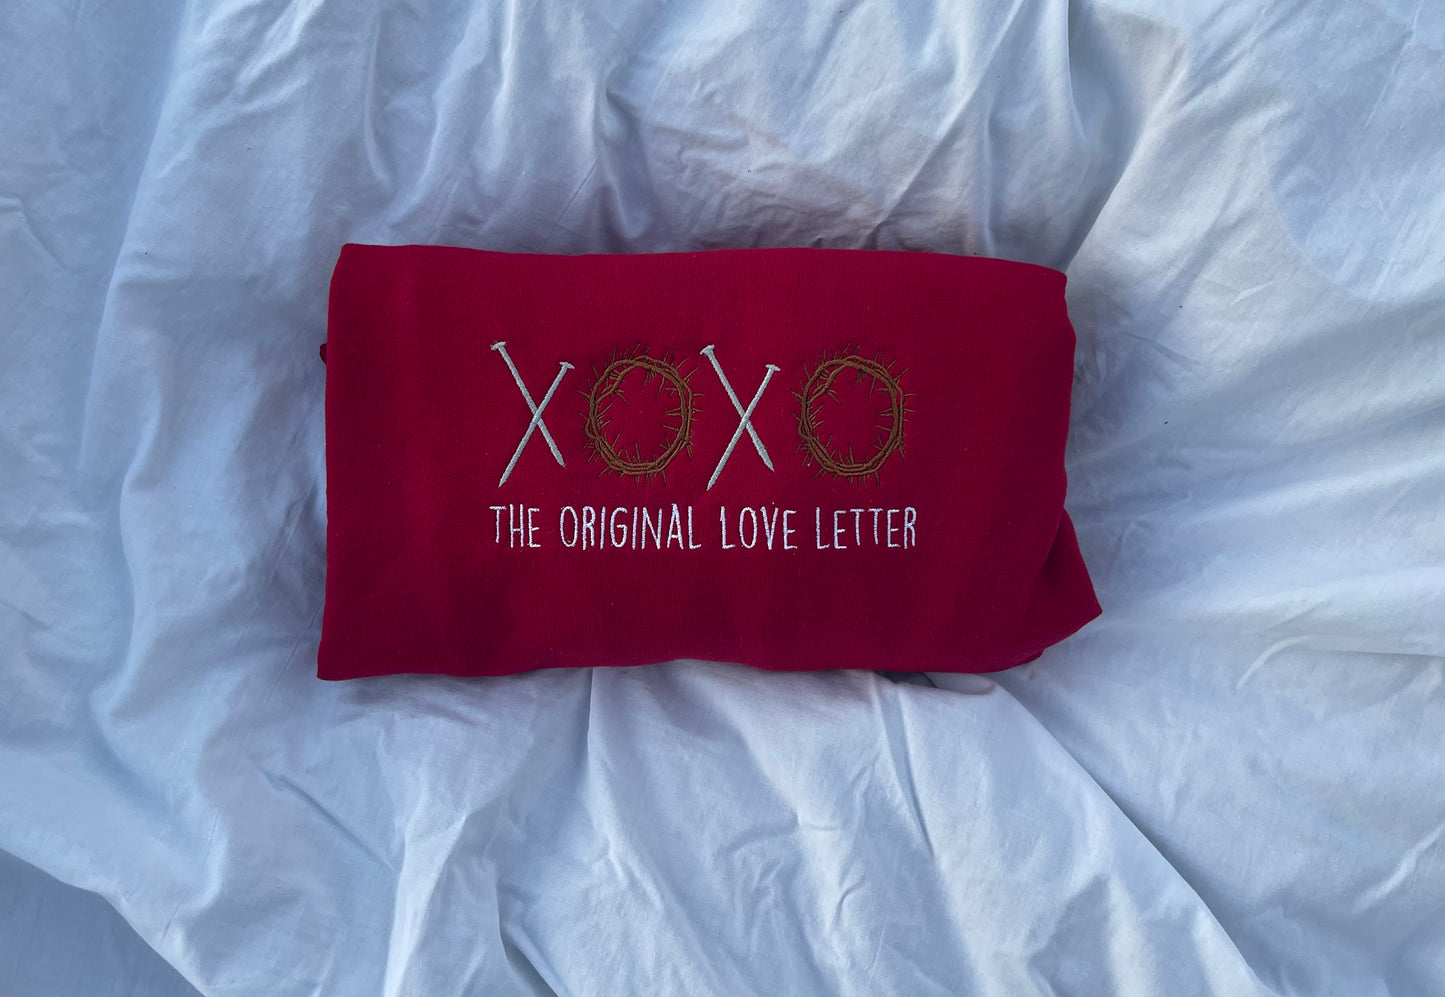 The Original Love Letter